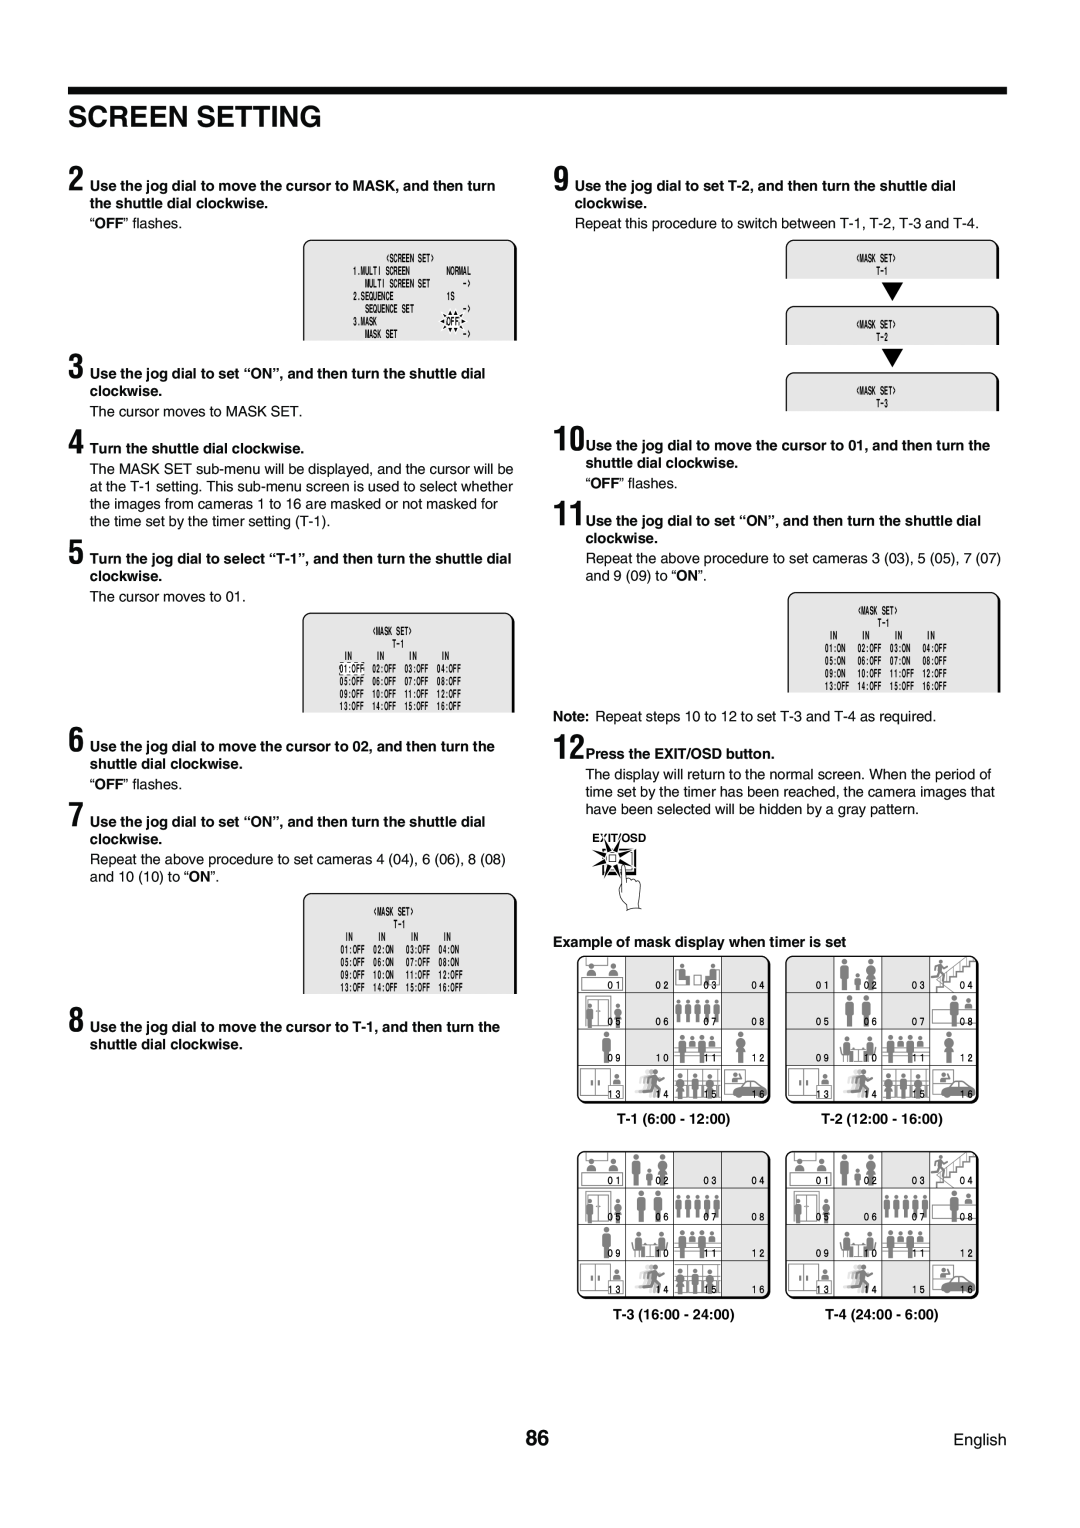 Sanyo DSR-3009P instruction manual Screen Setting, T-1, T-3 1600, T-2 1200, T-4 2400 